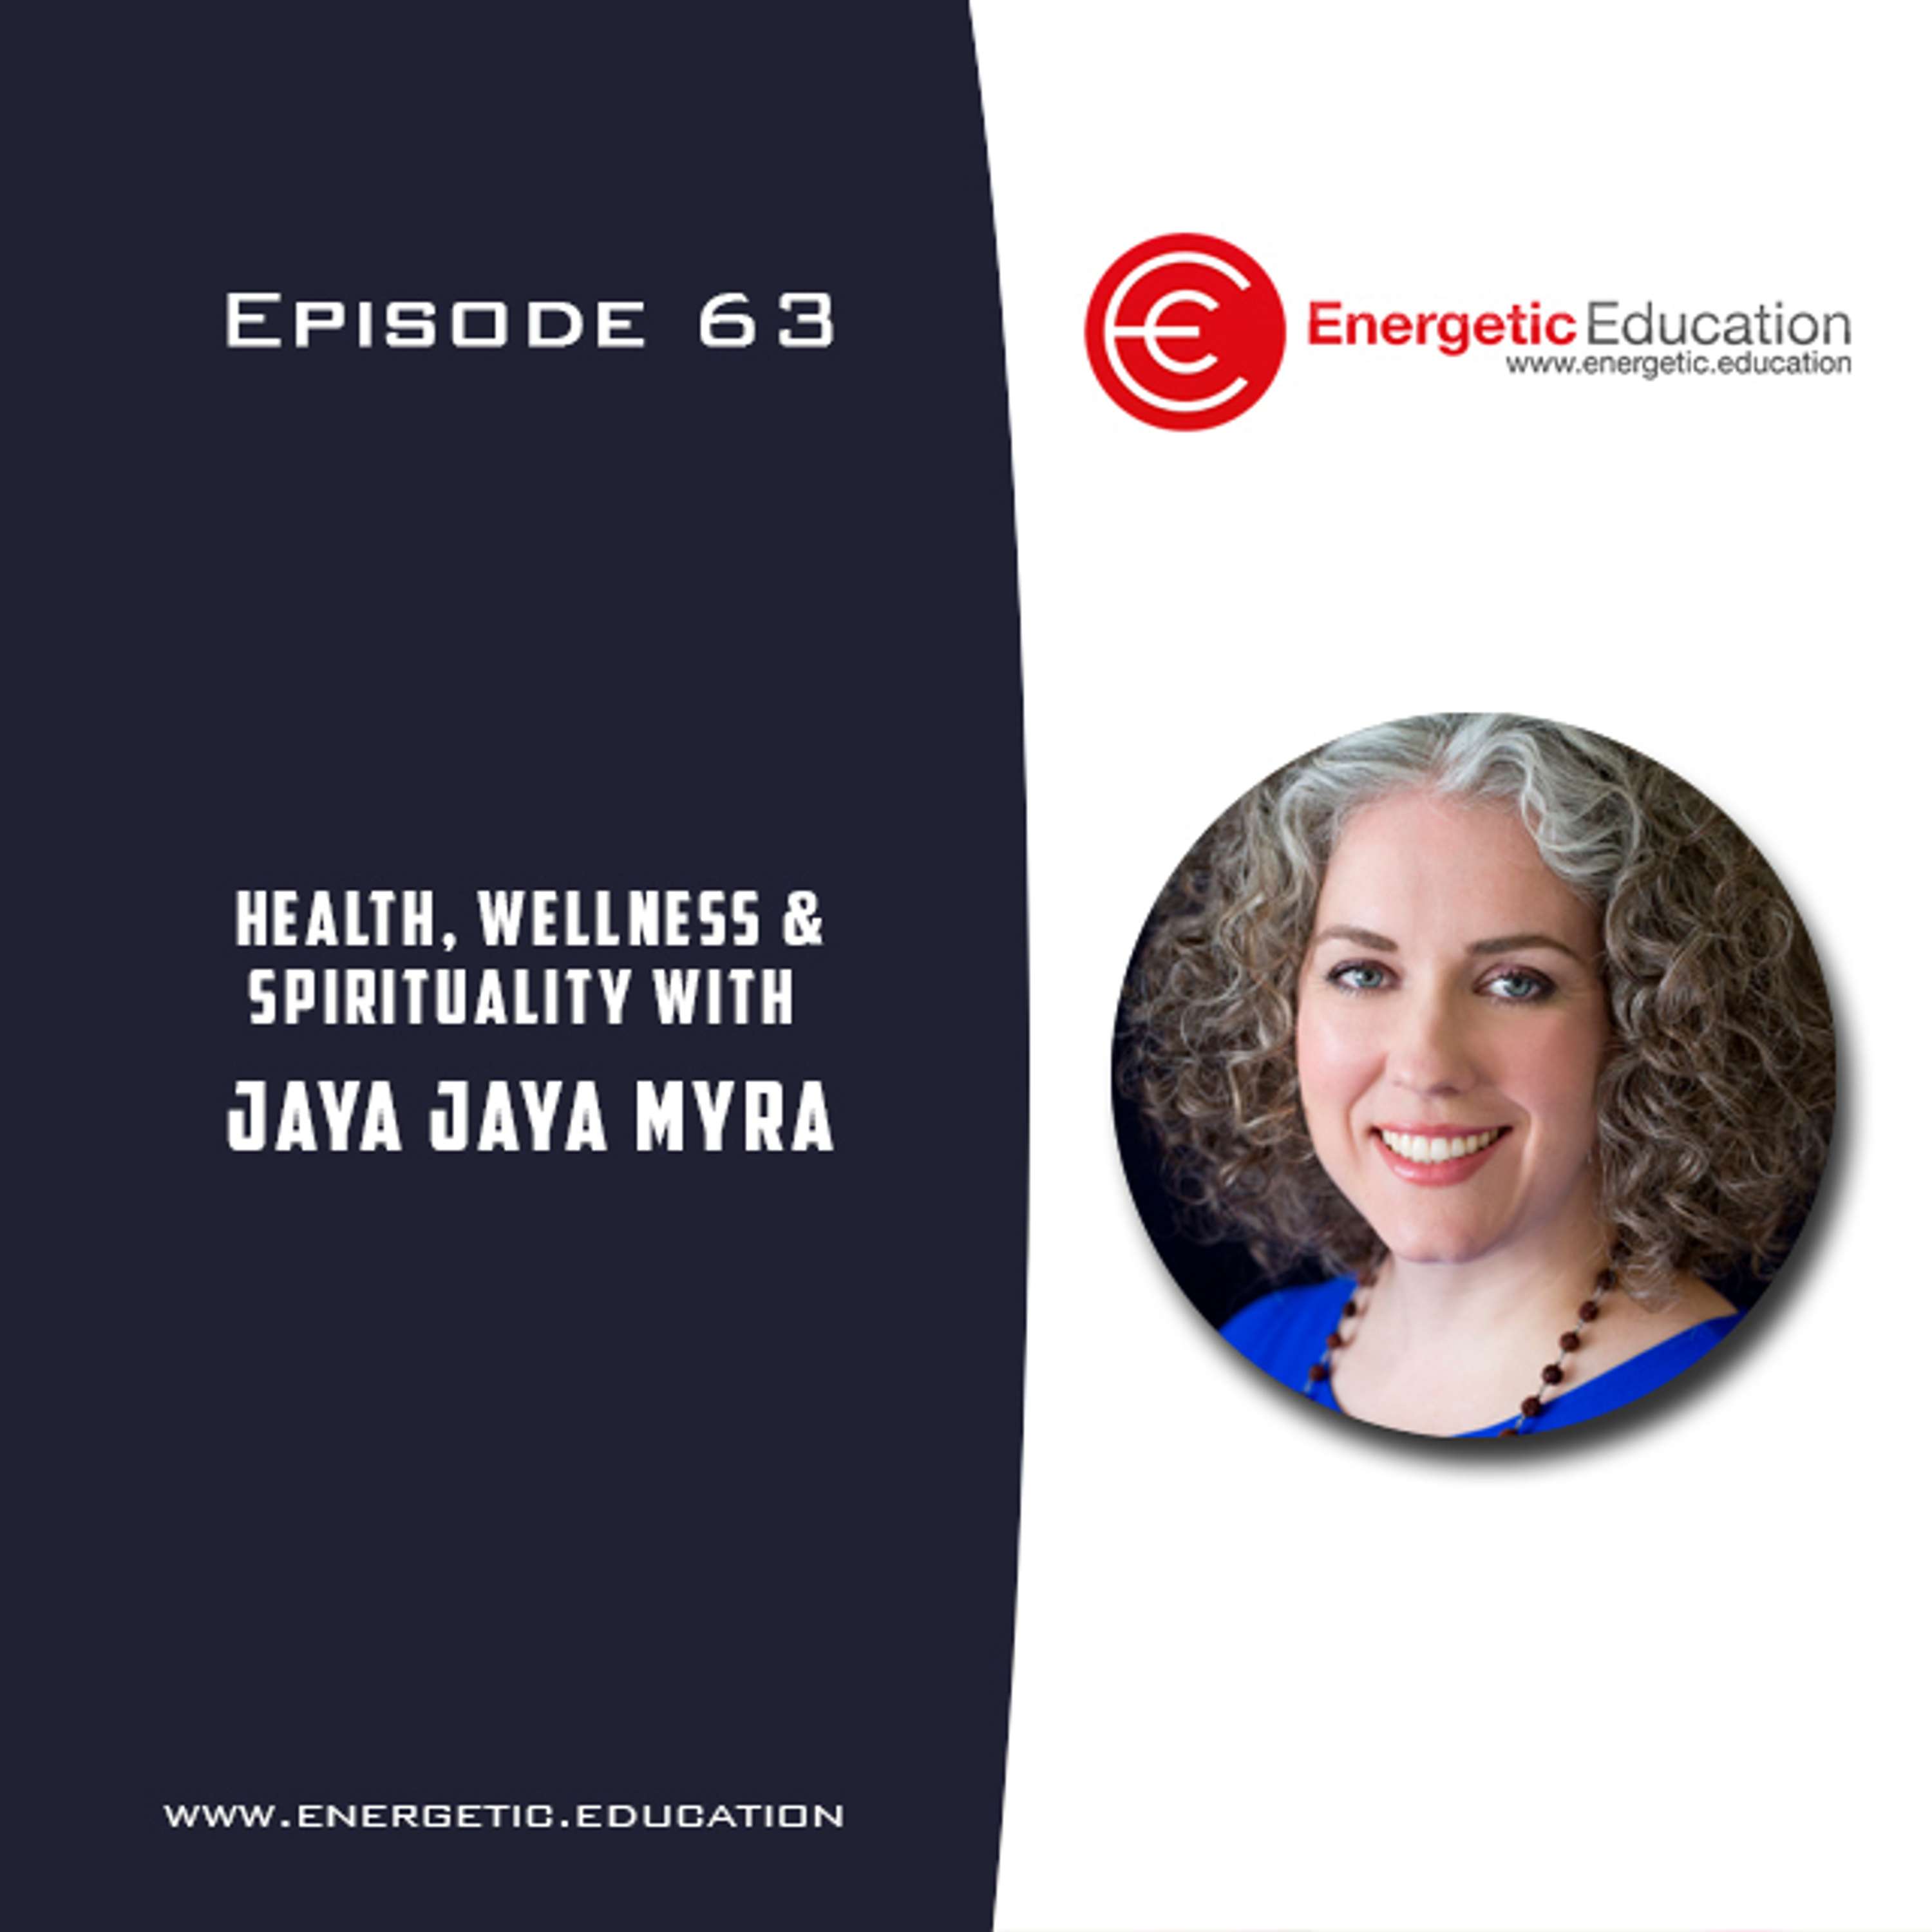 Episode 63 - Health, wellness & spirituality with Jaya Jaya Myra